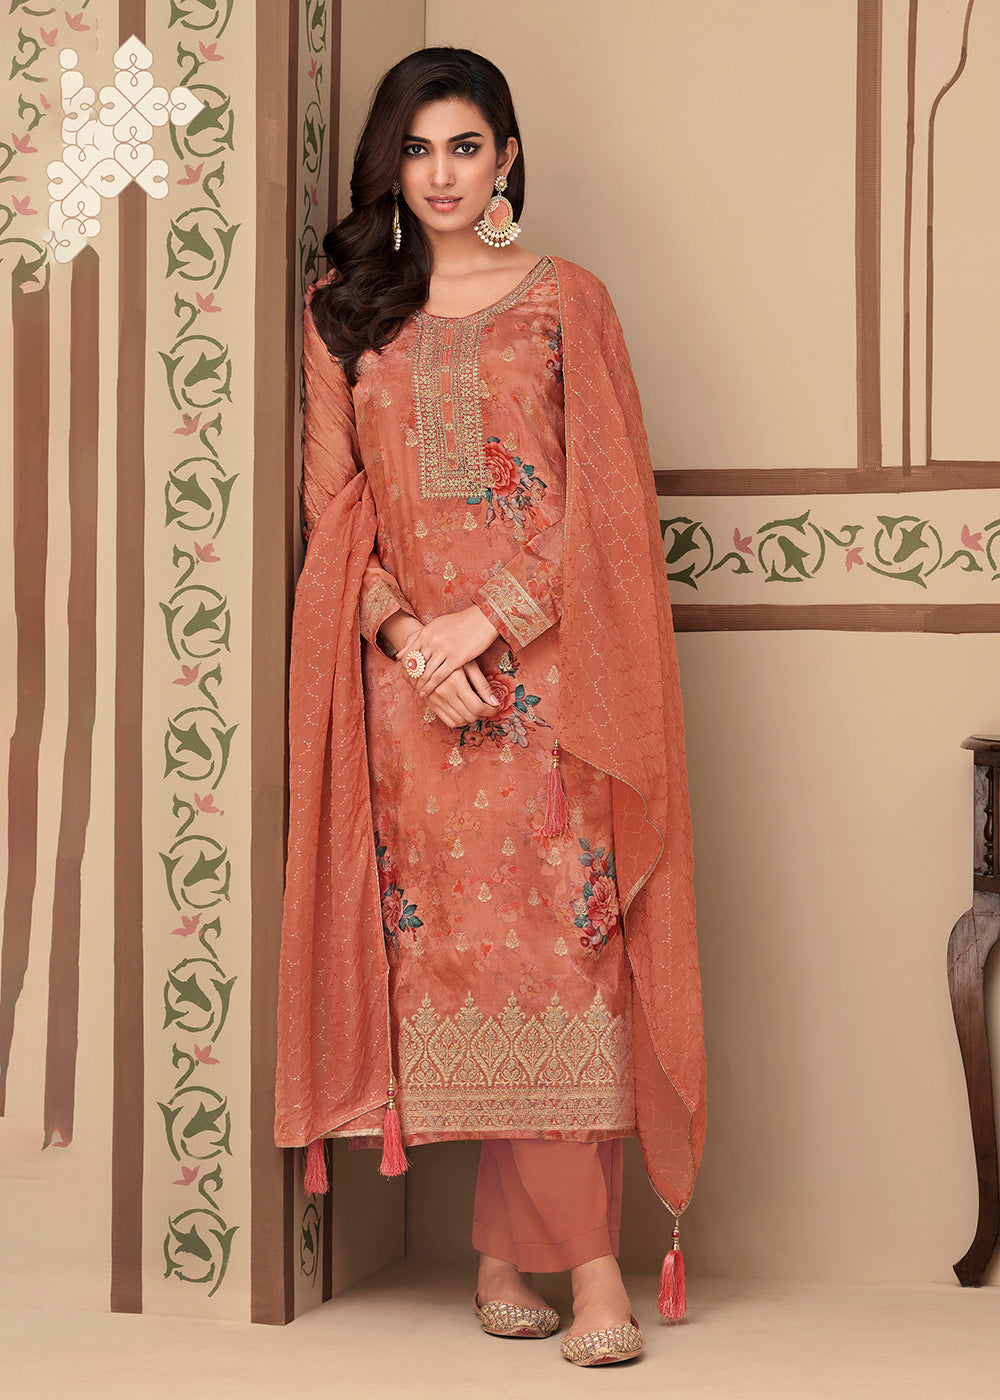 Buy Now Jacquard Silk Inventive Orange Digital Printed Salwar Suit Online in USA, UK, Canada, Germany, Australia & Worldwide at Empress Clothing